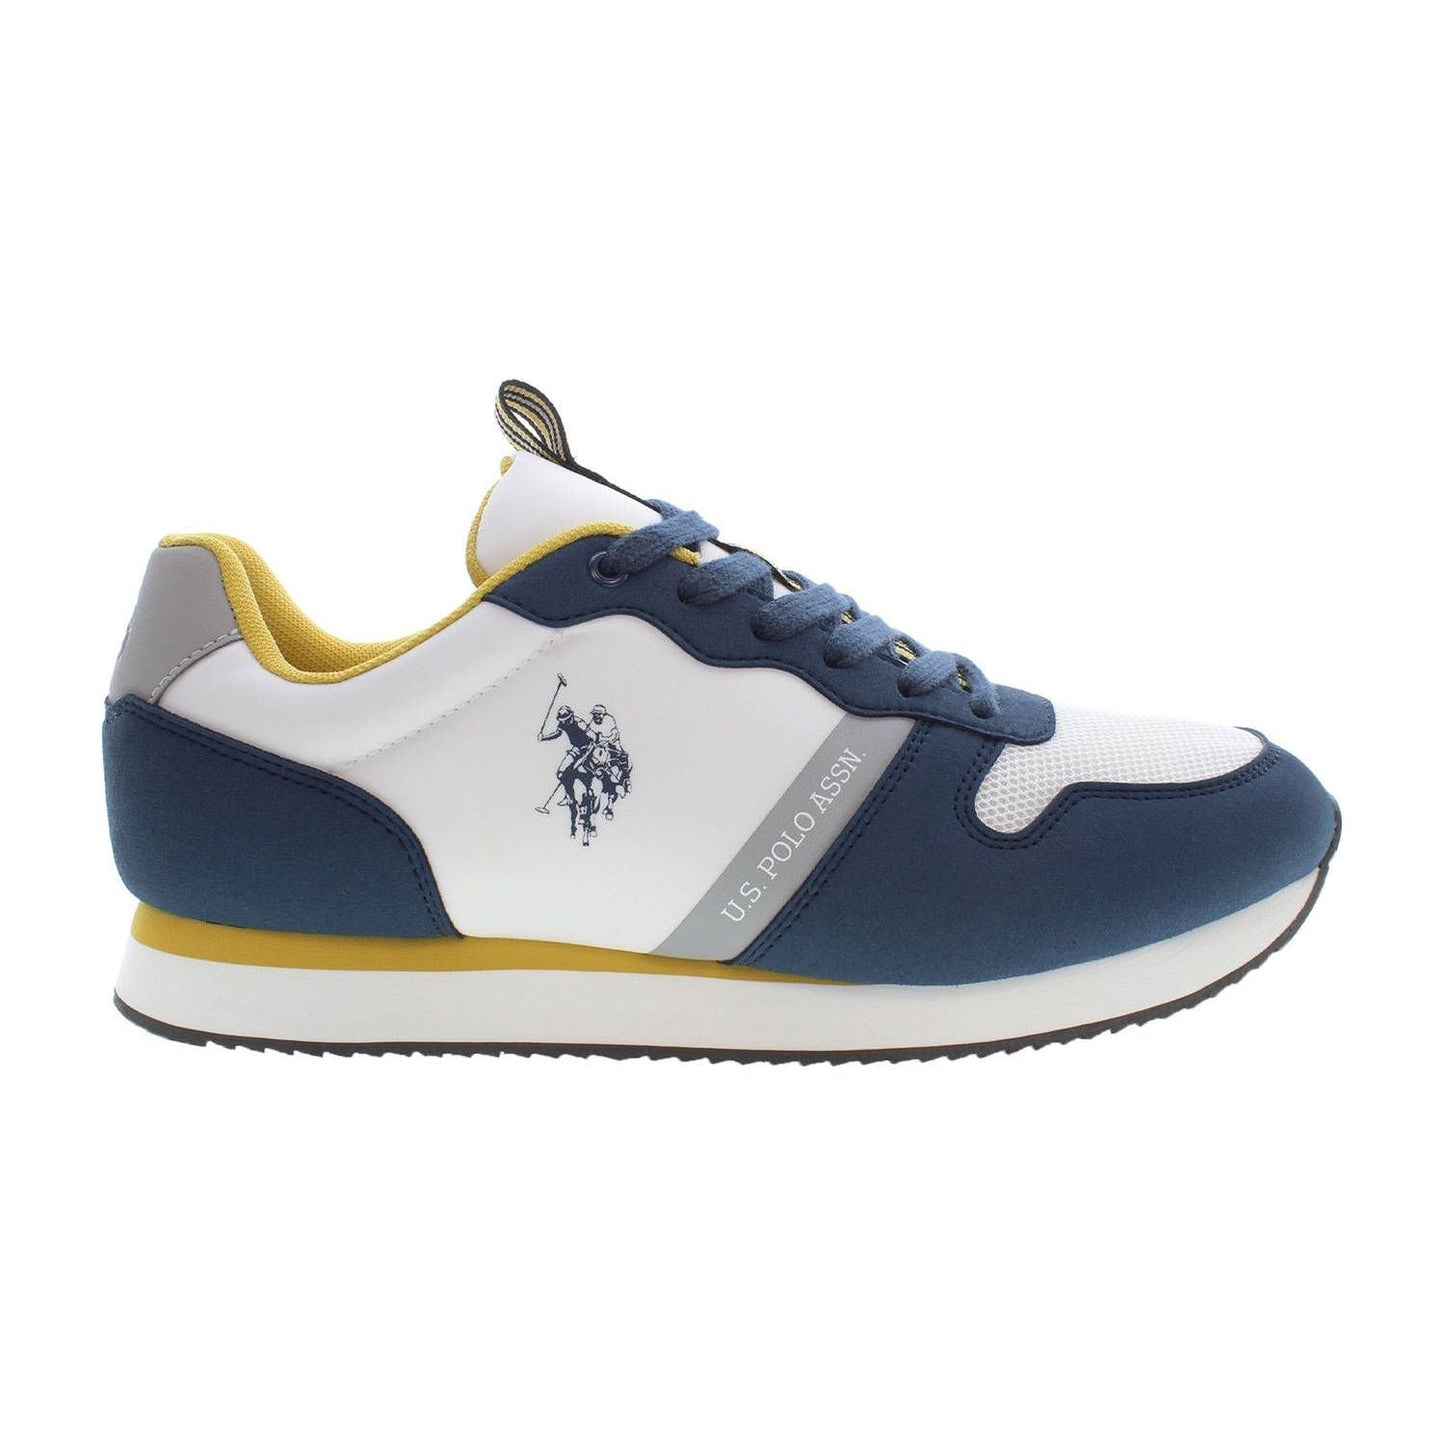 U.S. POLO ASSN. Sleek Blue Sneakers with Contrast Details sleek-blue-sneakers-with-contrast-details